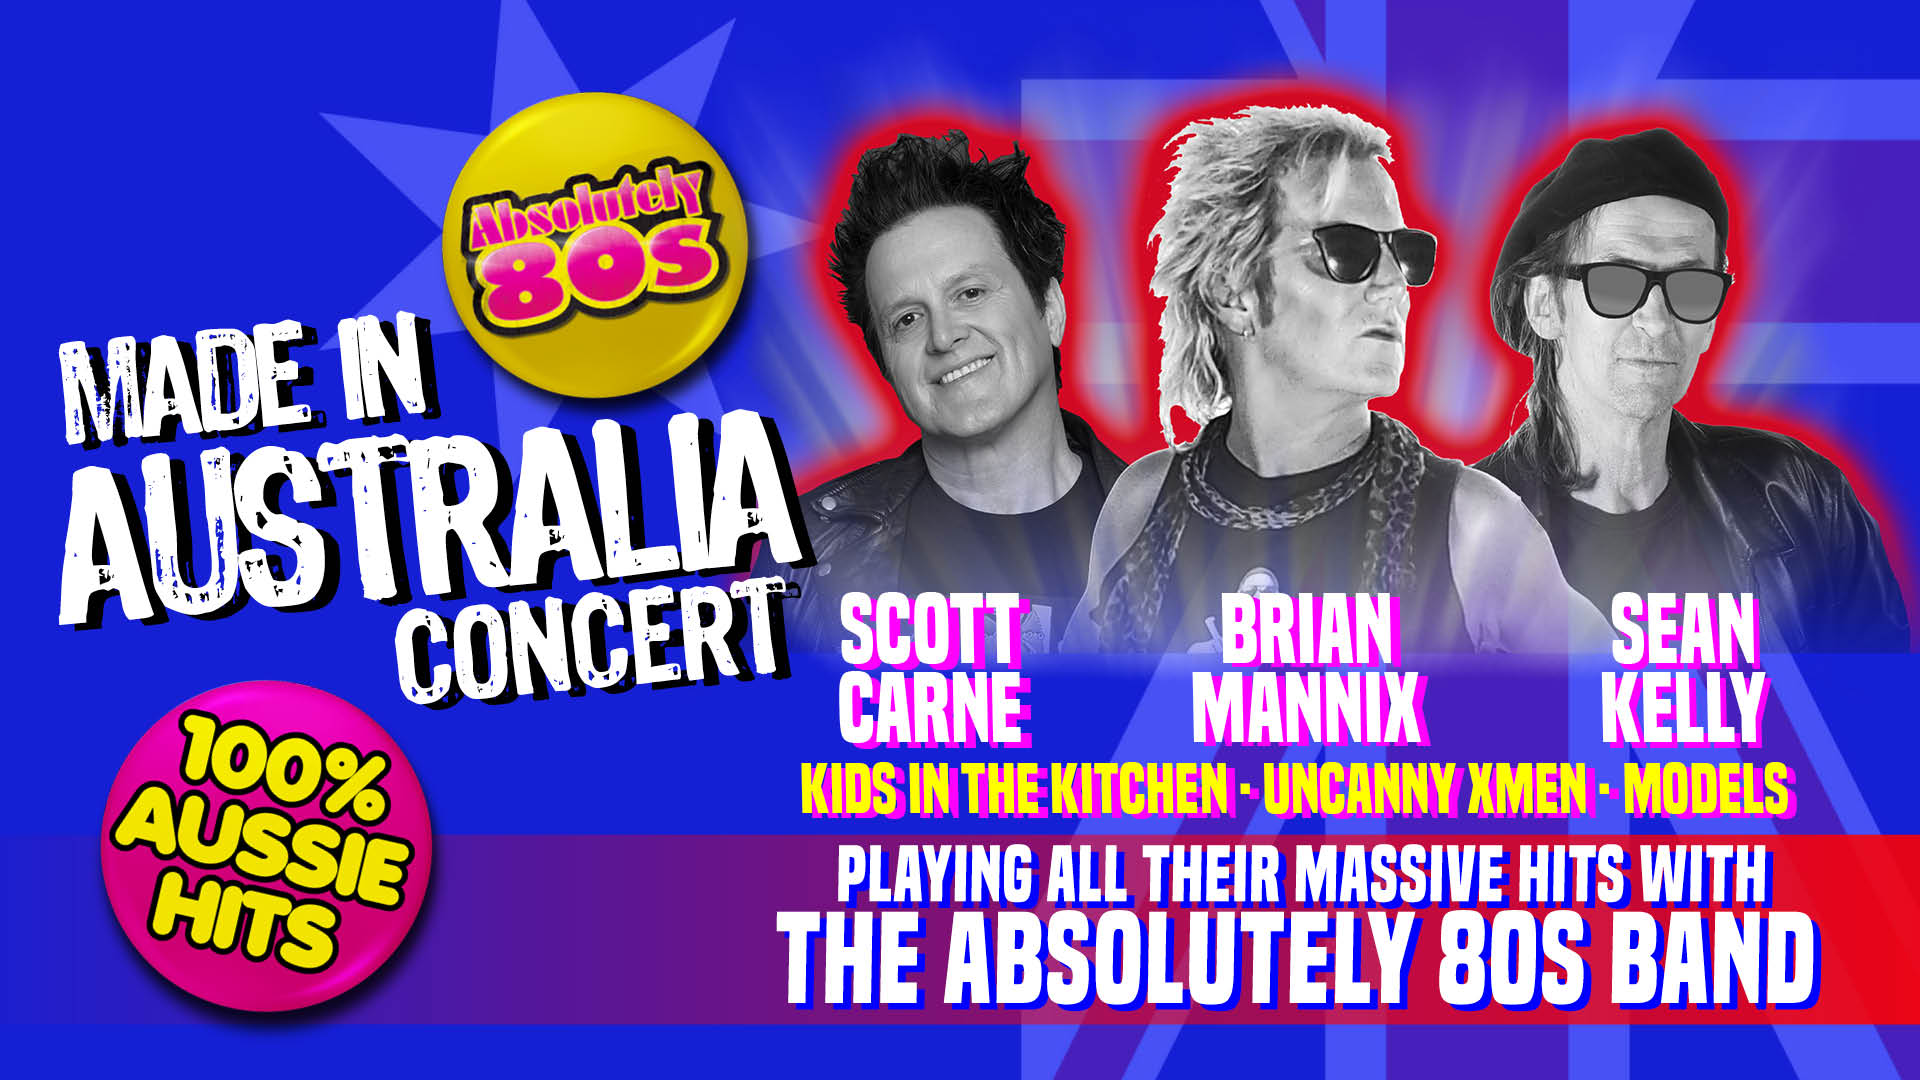 Made in Australia show - Scott Carne, Brian Mannix, Sean Kelly